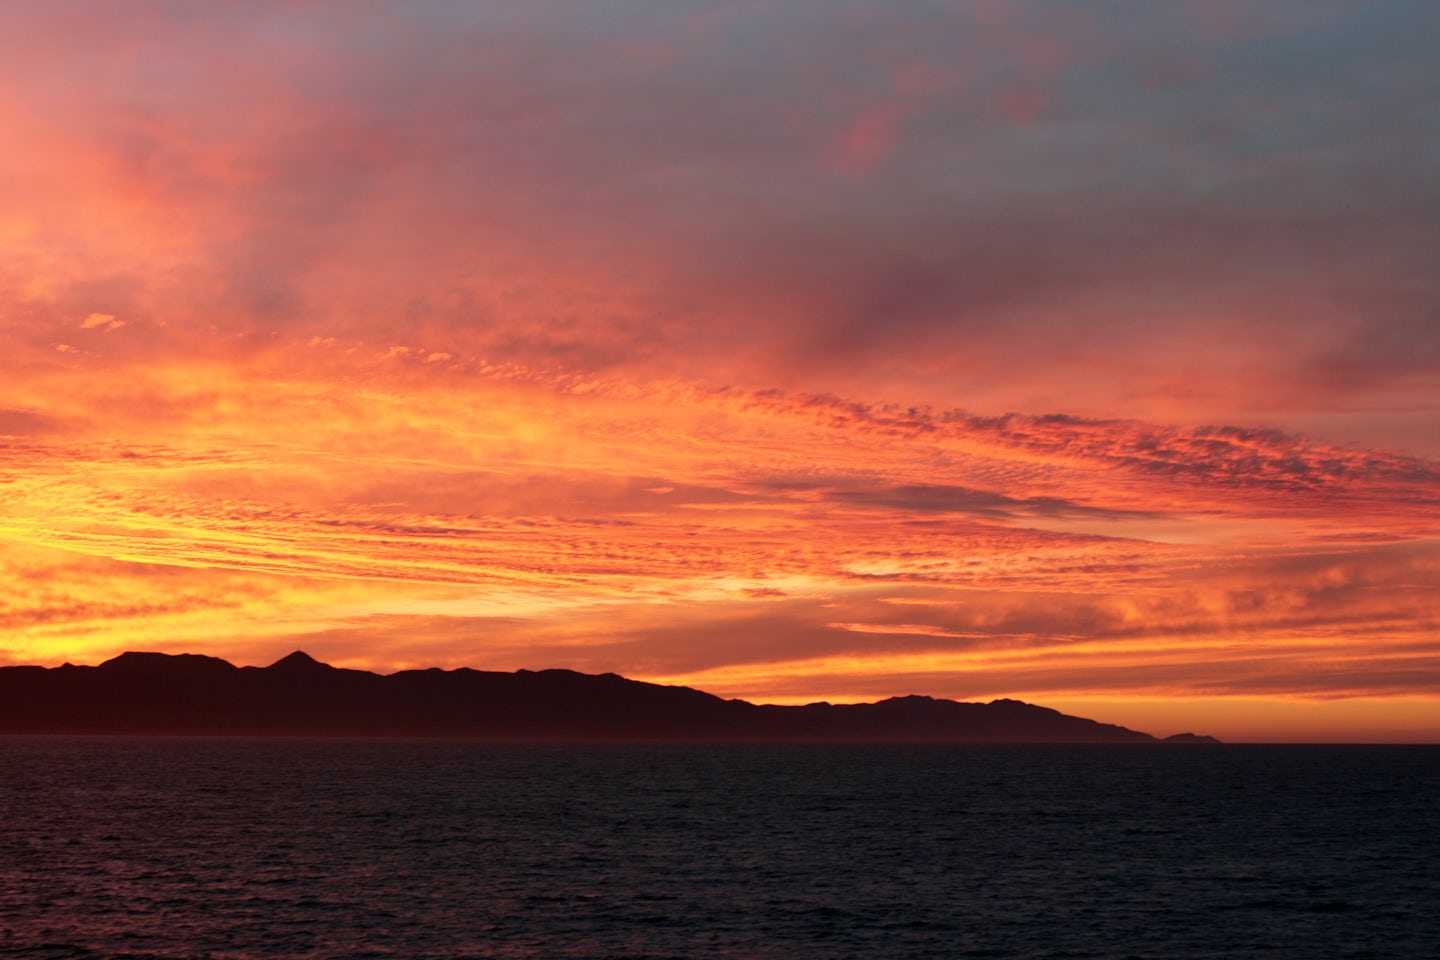 Sunset during sail away. Stunning.